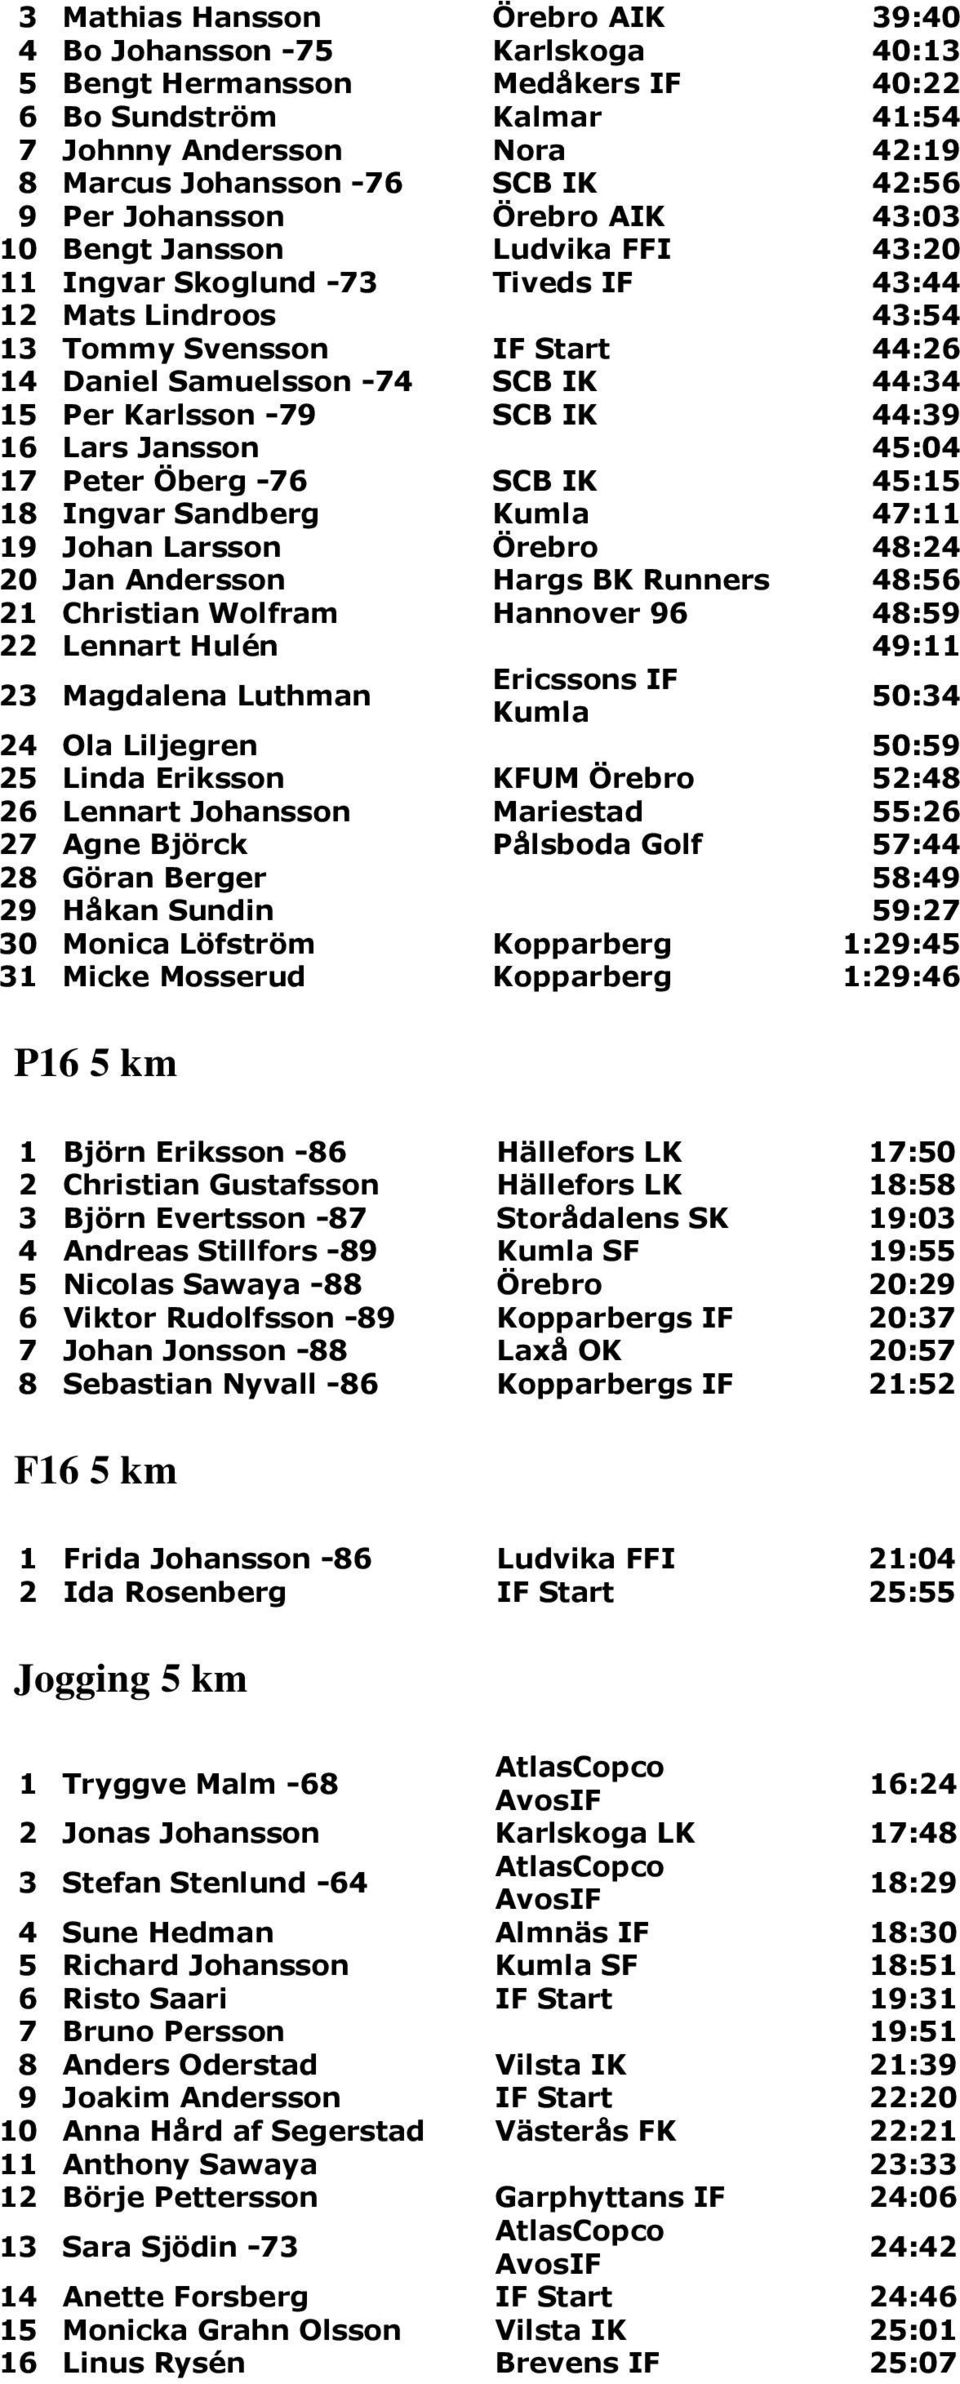 IK 44:34 15 Per Karlsson -79 SCB IK 44:39 16 Lars Jansson 45:04 17 Peter Öberg -76 SCB IK 45:15 18 Ingvar Sandberg Kumla 47:11 19 Johan Larsson Örebro 48:24 20 Jan Andersson Hargs BK Runners 48:56 21